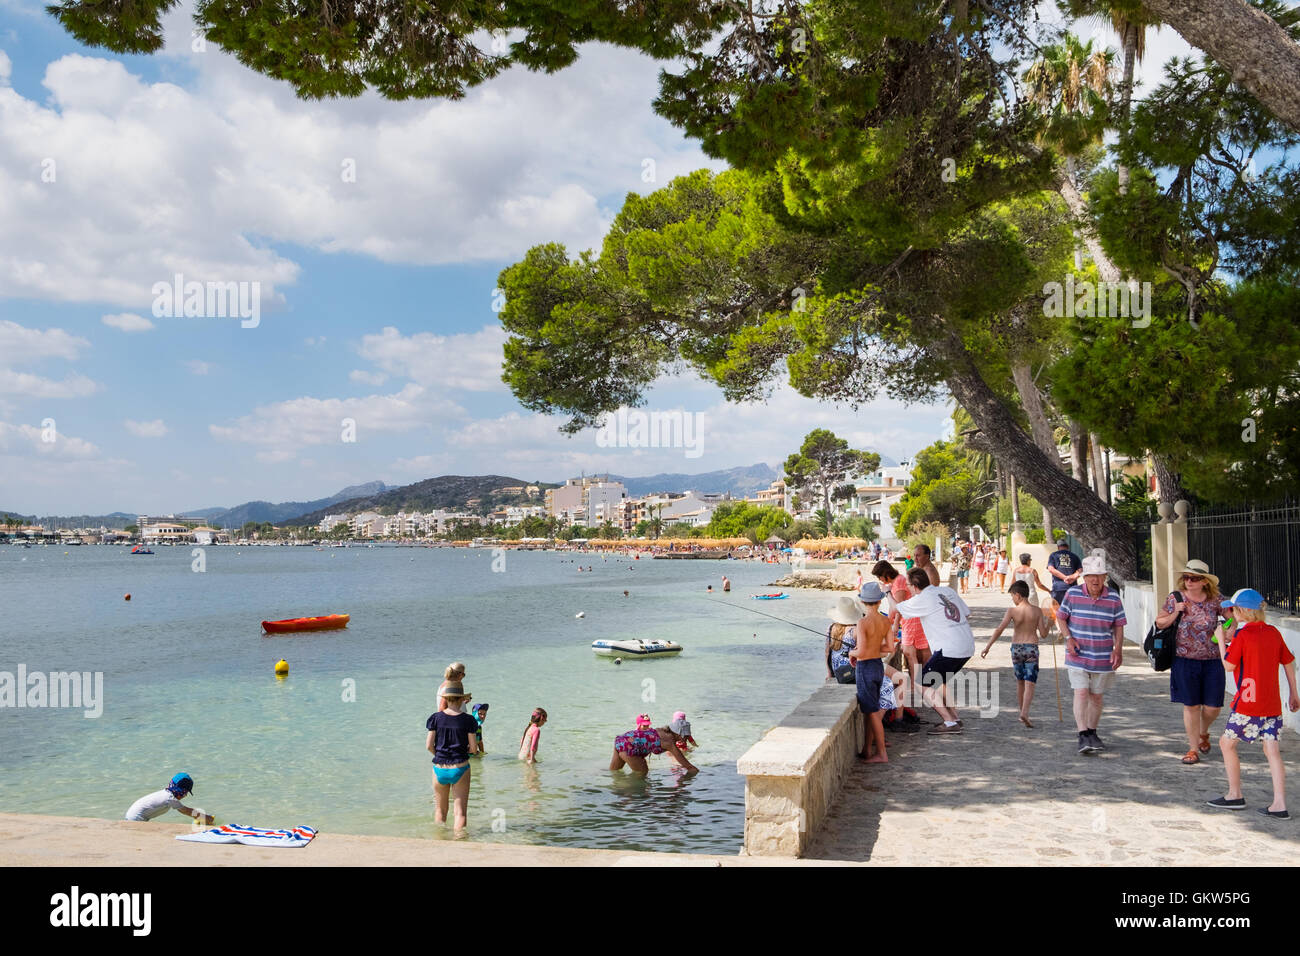 Pine walk and beach at Puerto Pollensa, Mallorca / Majorca Balearic ...